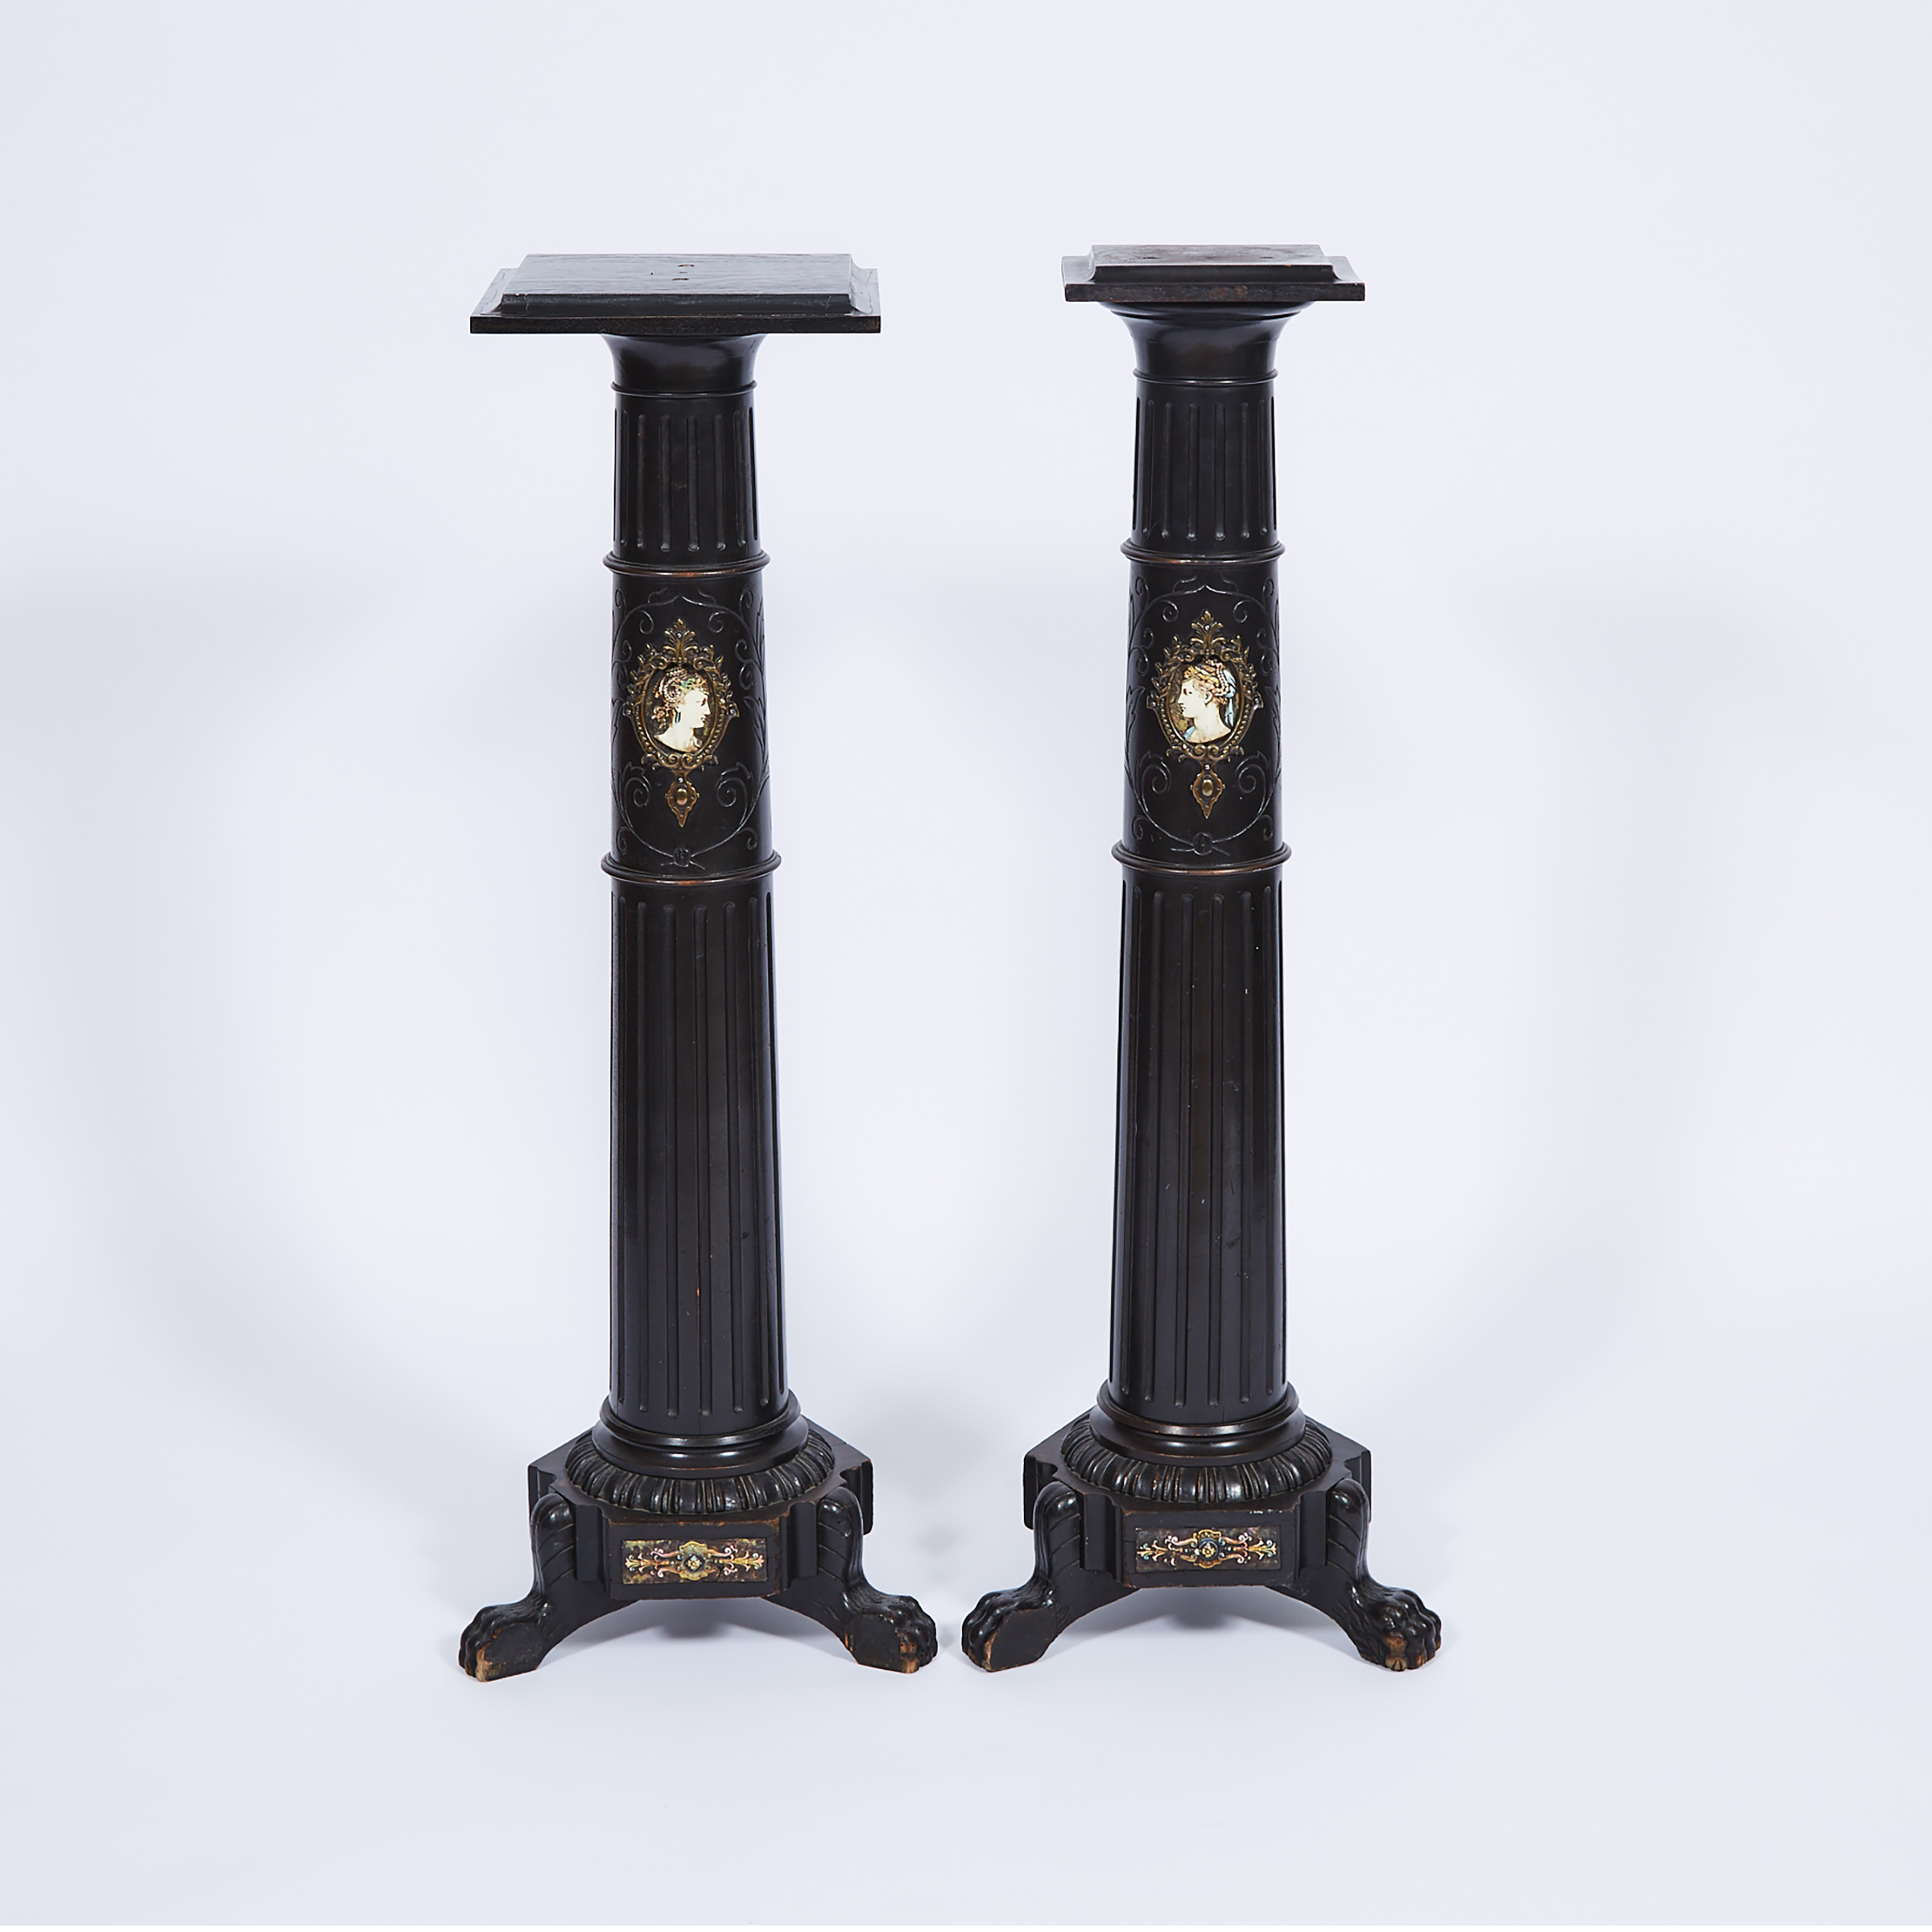 Pair of Victorian Column Form Pedestals, c.1880